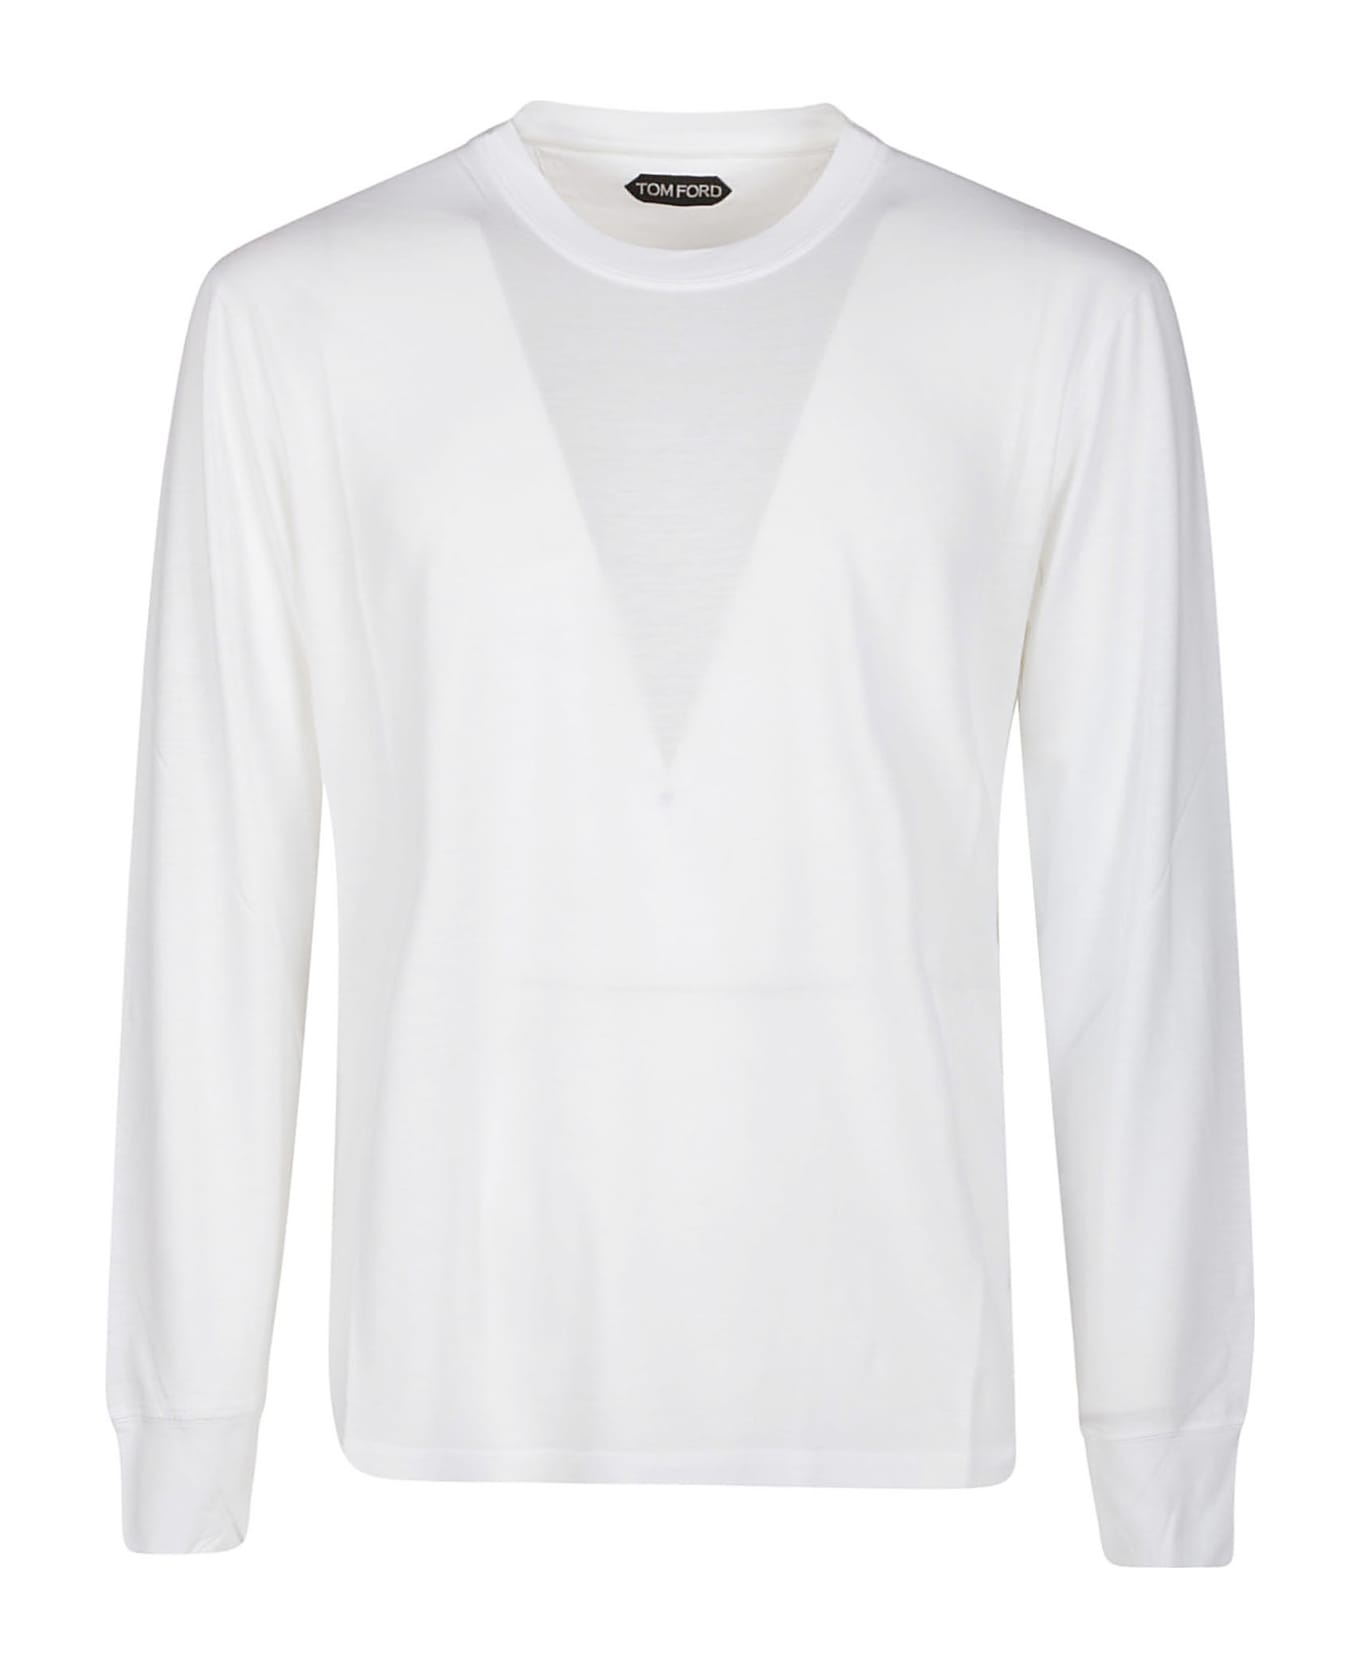 Tom Ford Classic L/s T-shirt - White